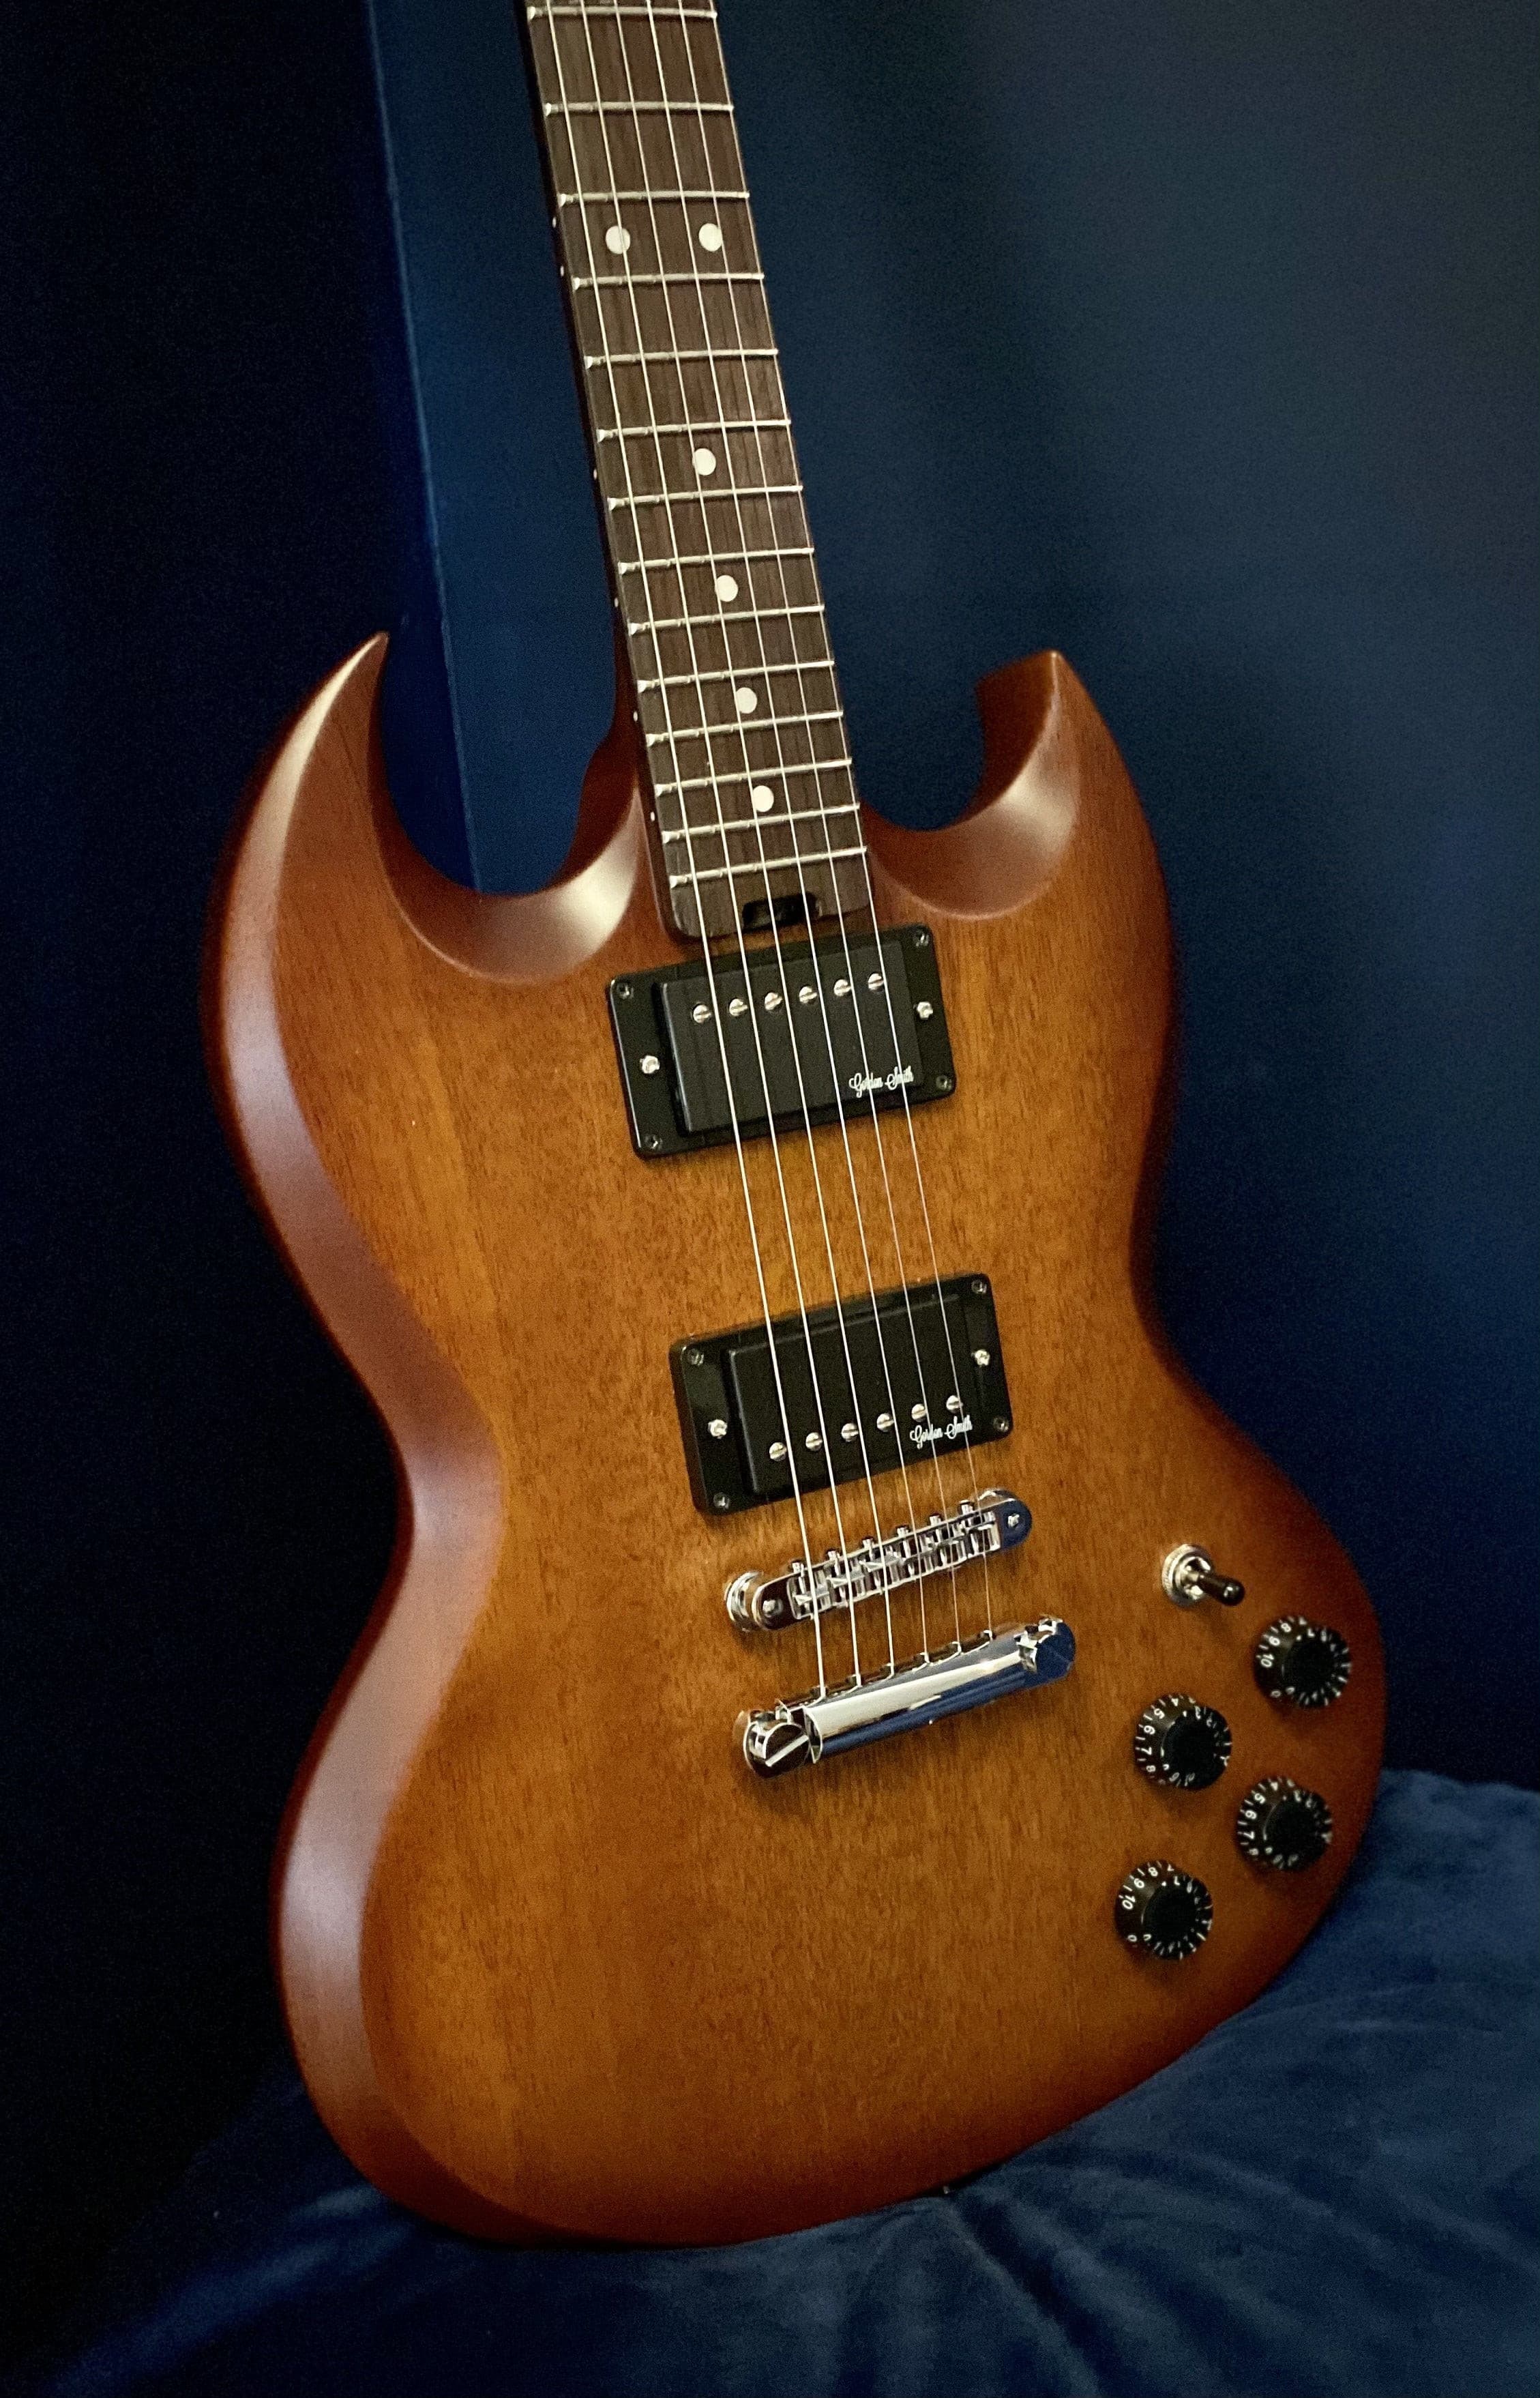 Gordon Smith SG2 Fireburst, Electric Guitar for sale at Richards Guitars.